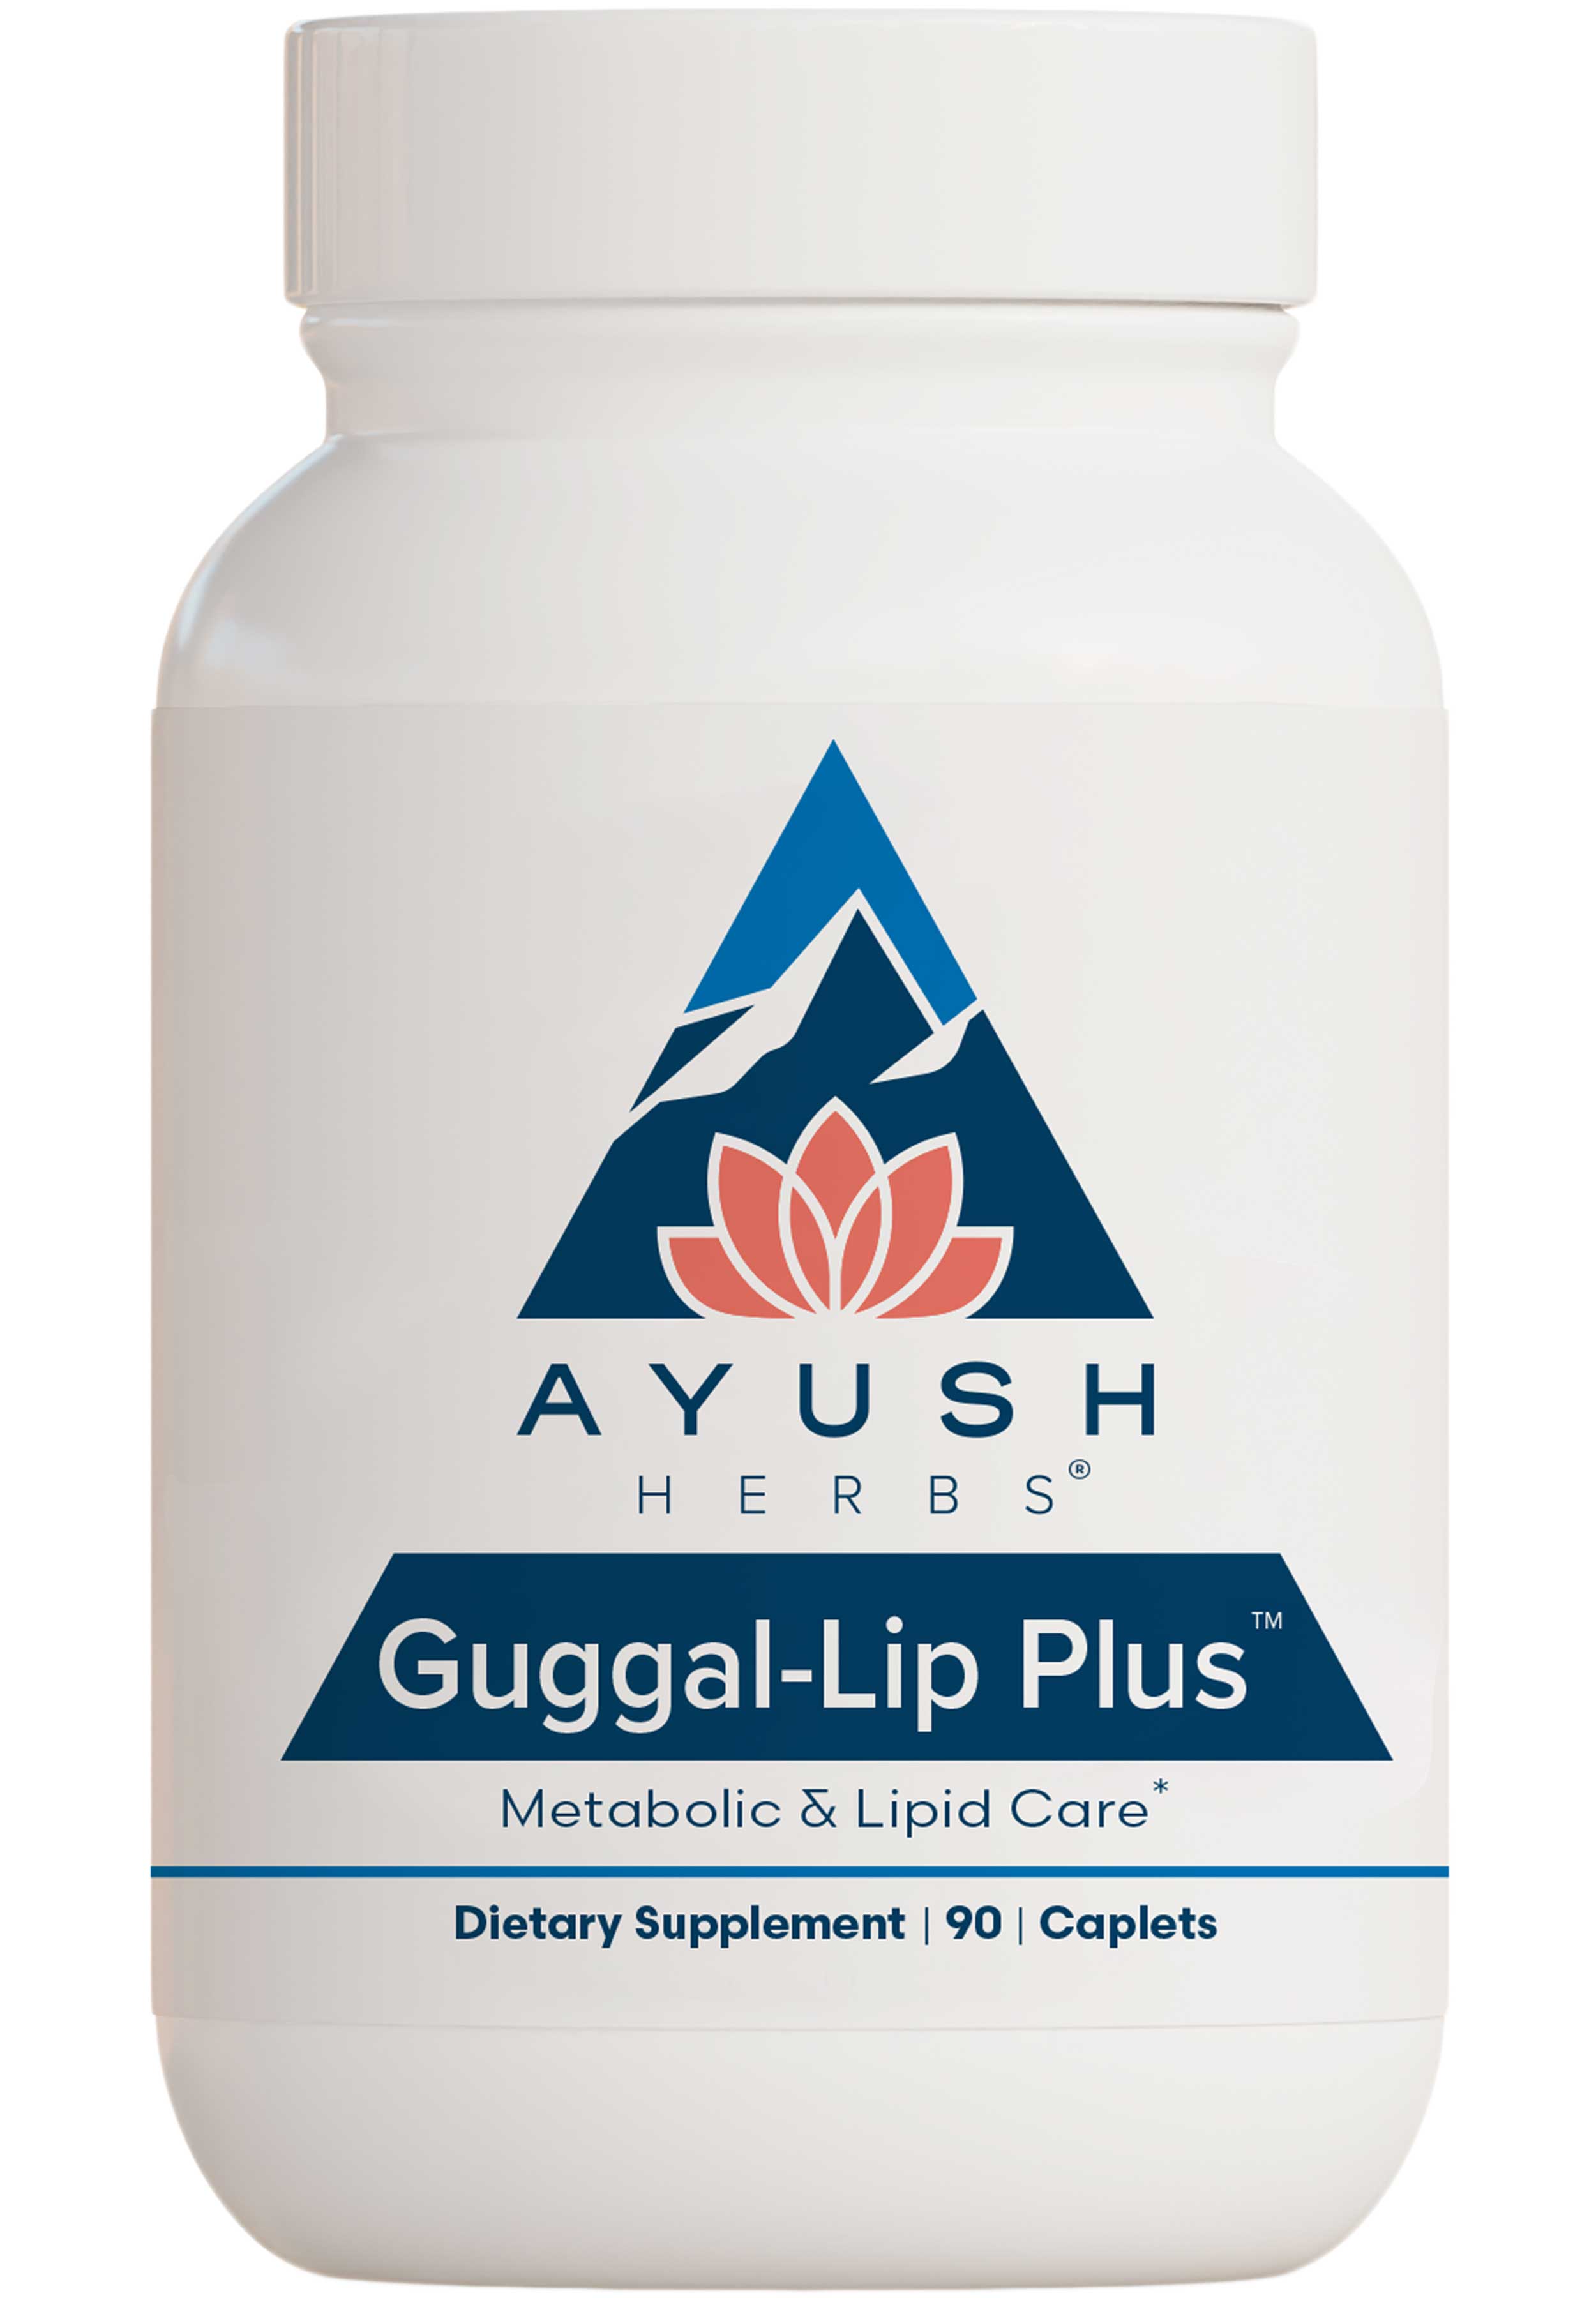 Ayush Herbs Guggal-Lip Plus